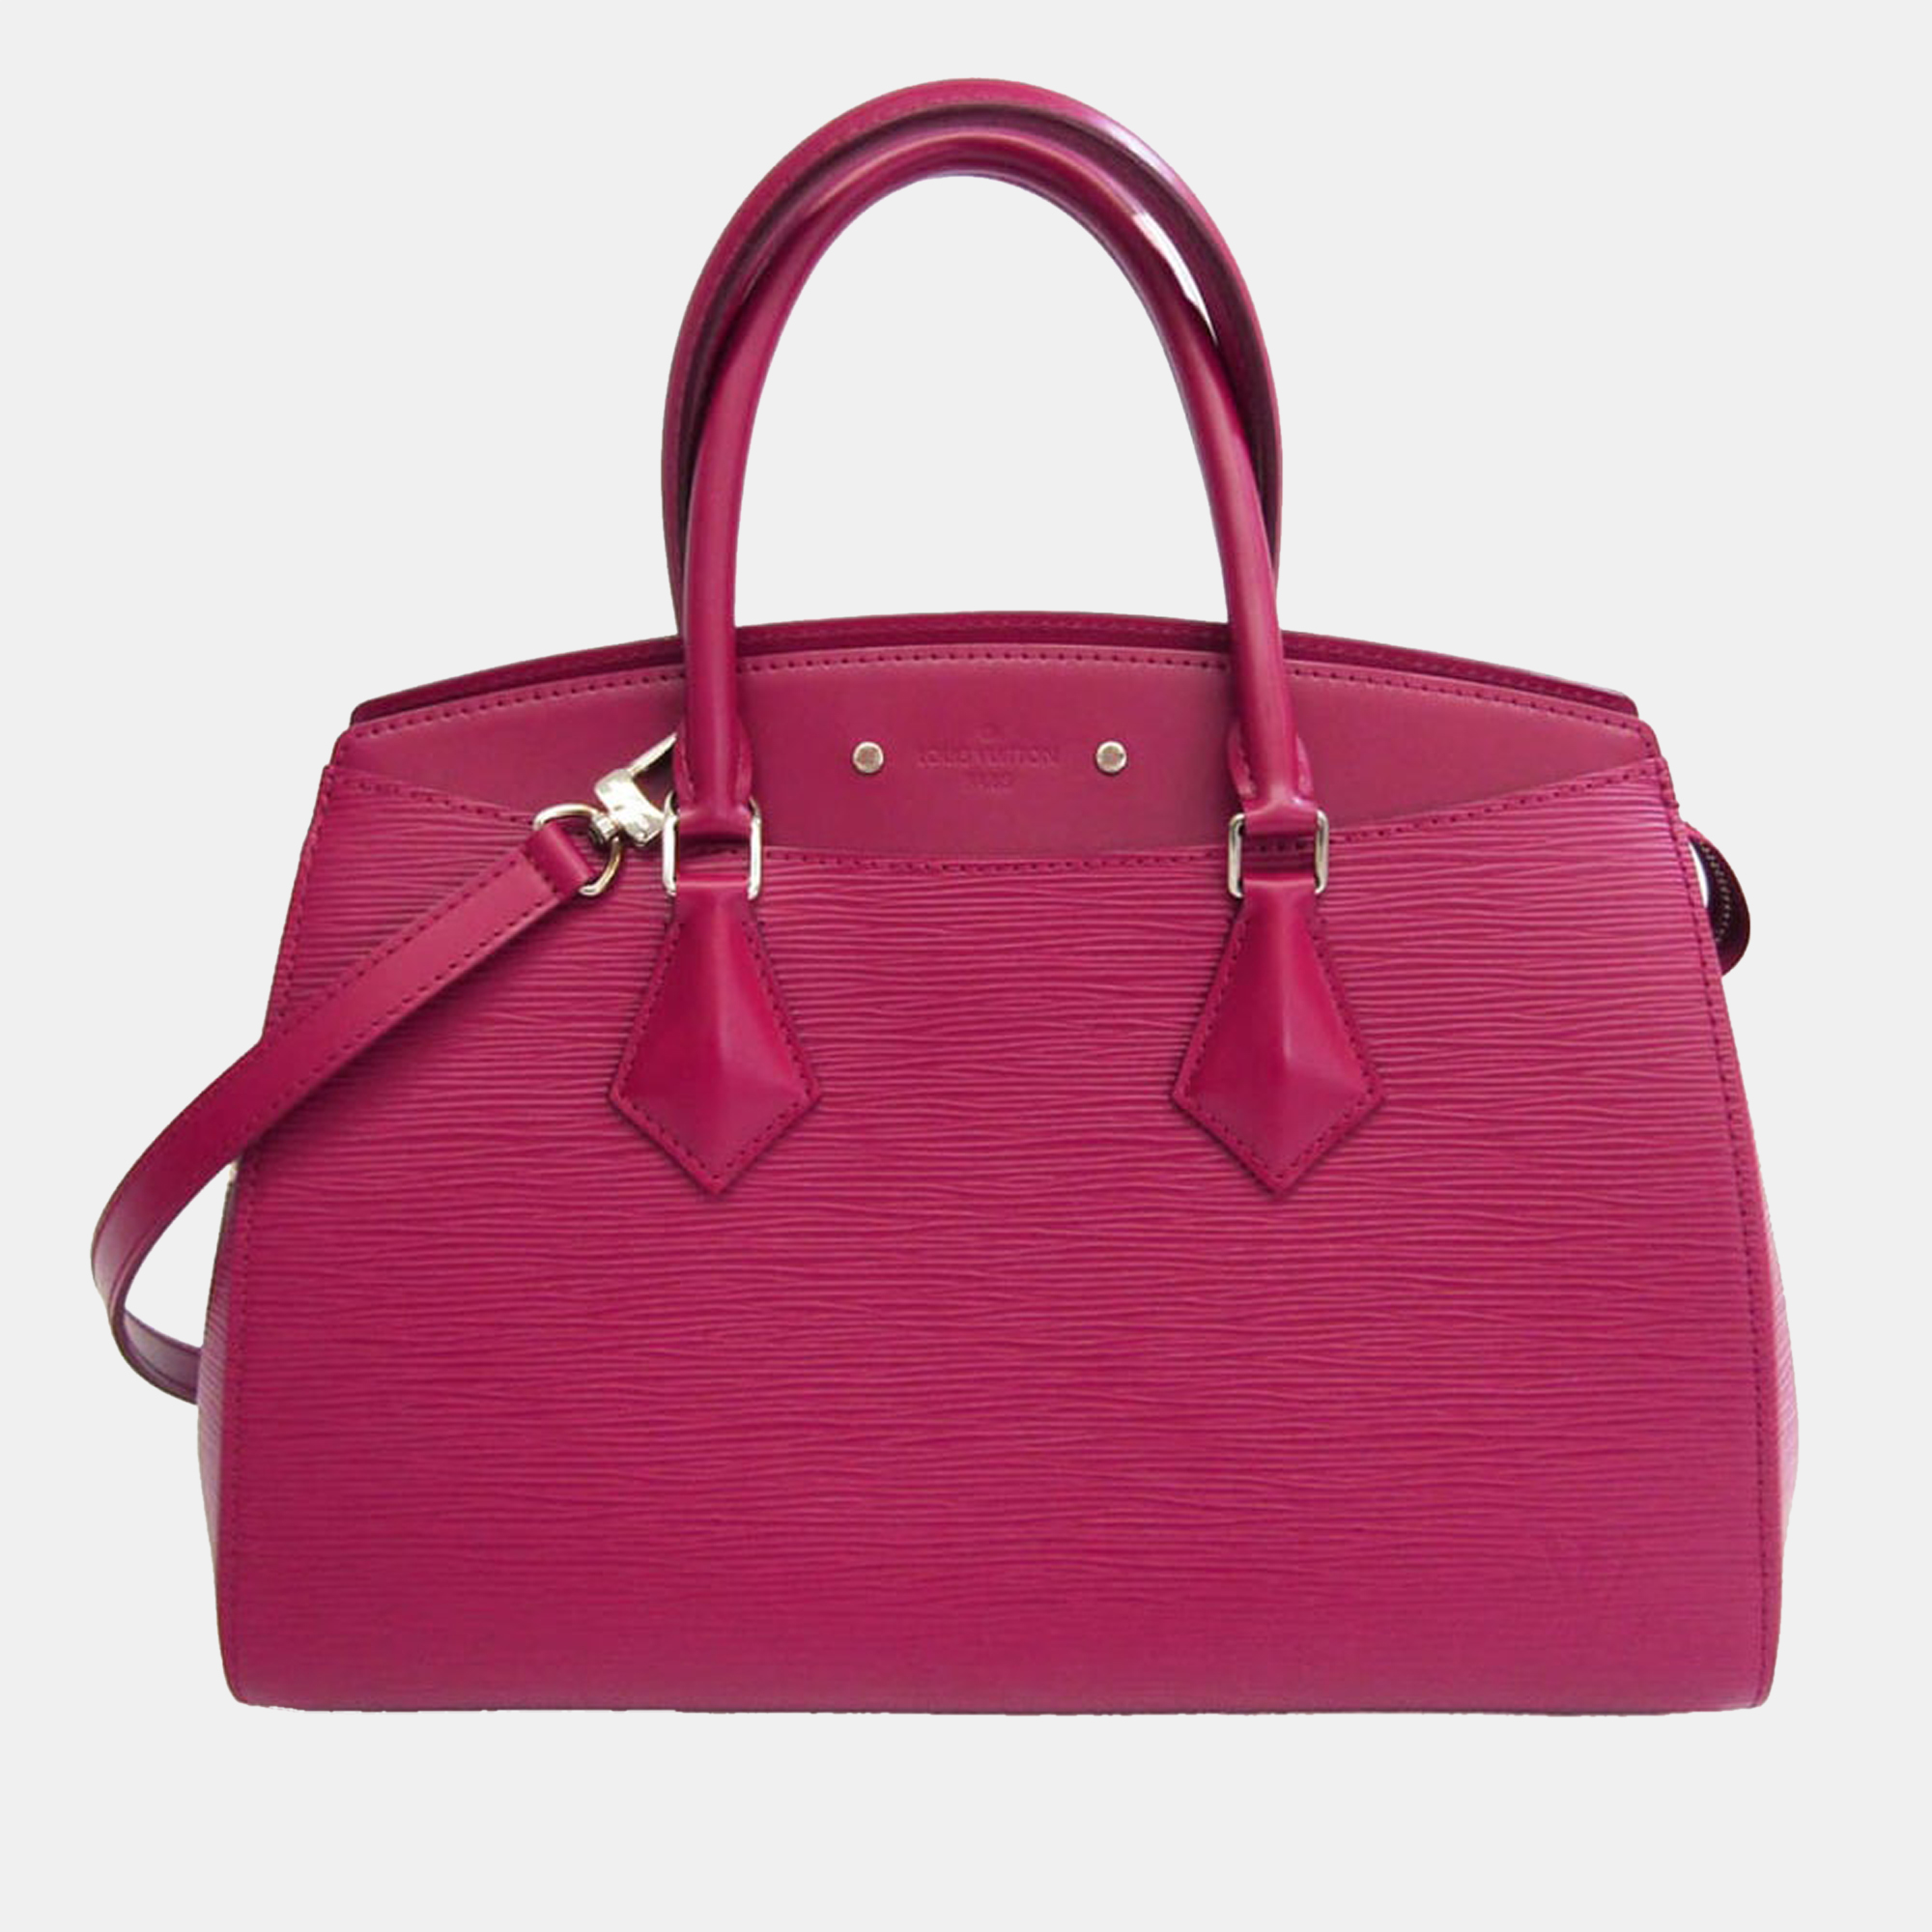 Louis Vuitton Pink Leather Soufflot MM Satchel